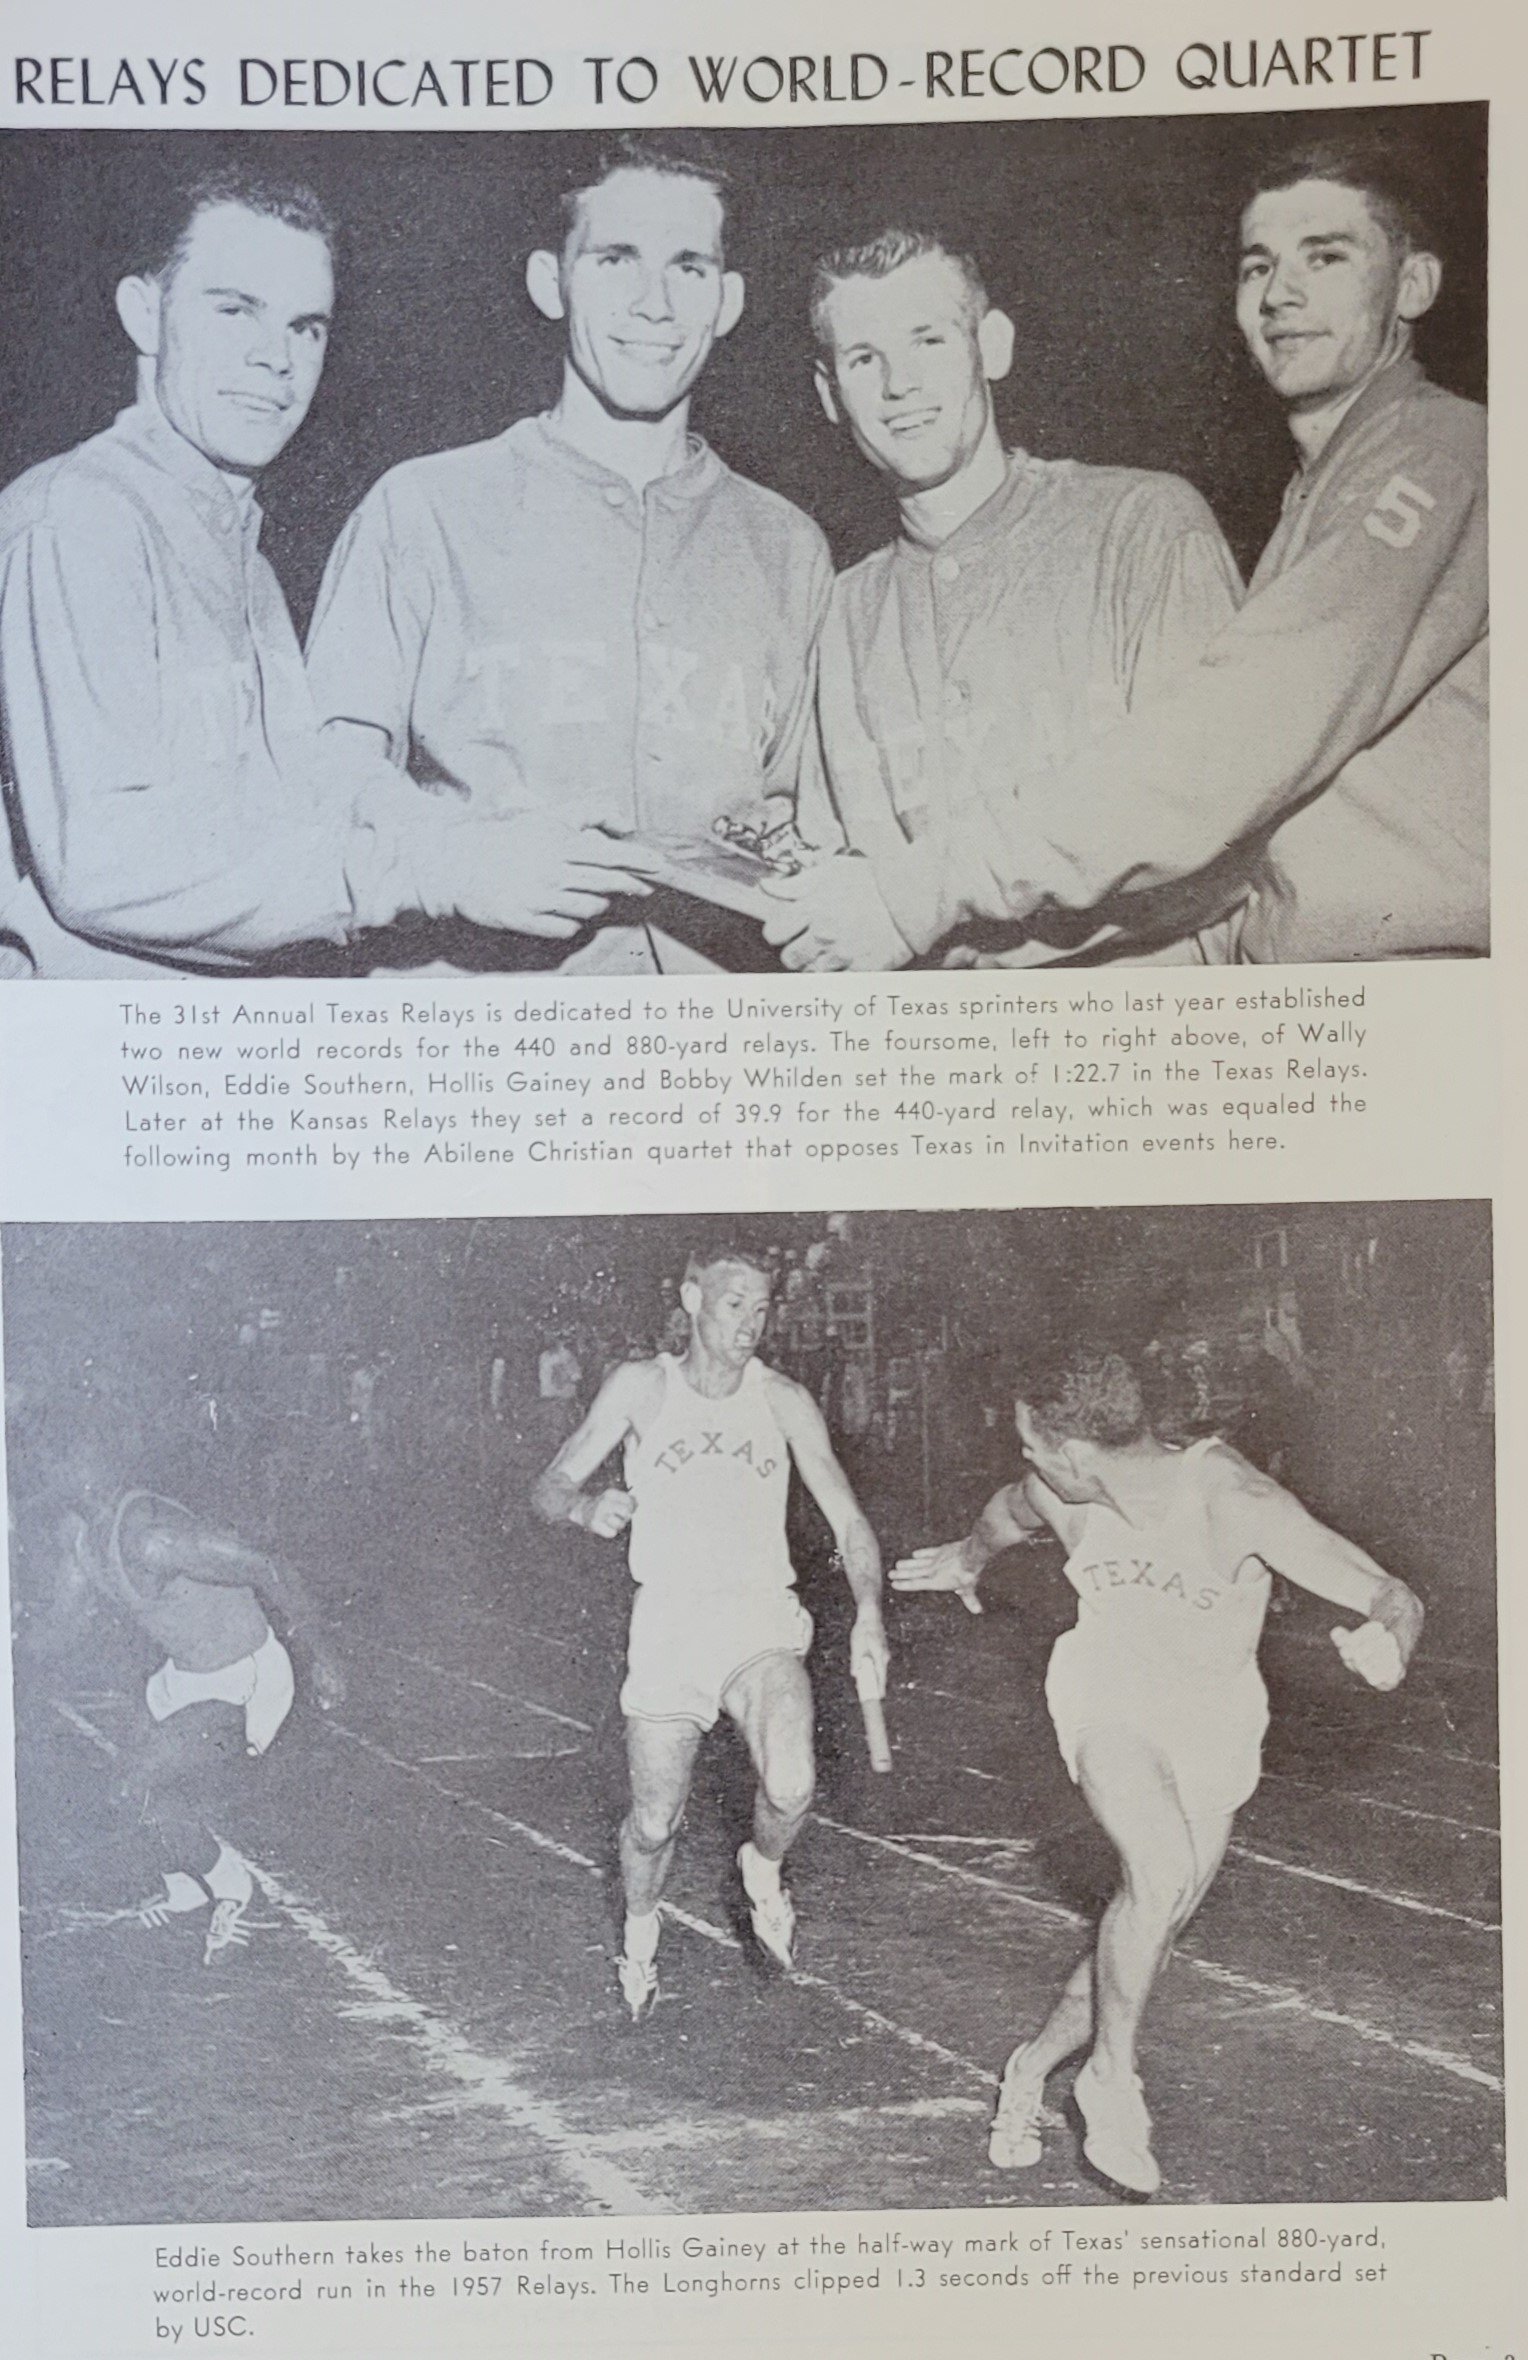  1958 Texas Relays  Conradt  world record holders Wally Wilson, Eddie Southern, Hollis Gainey, Bobby Whilden  -- Hollis gainey handed off to Eddie Southern 